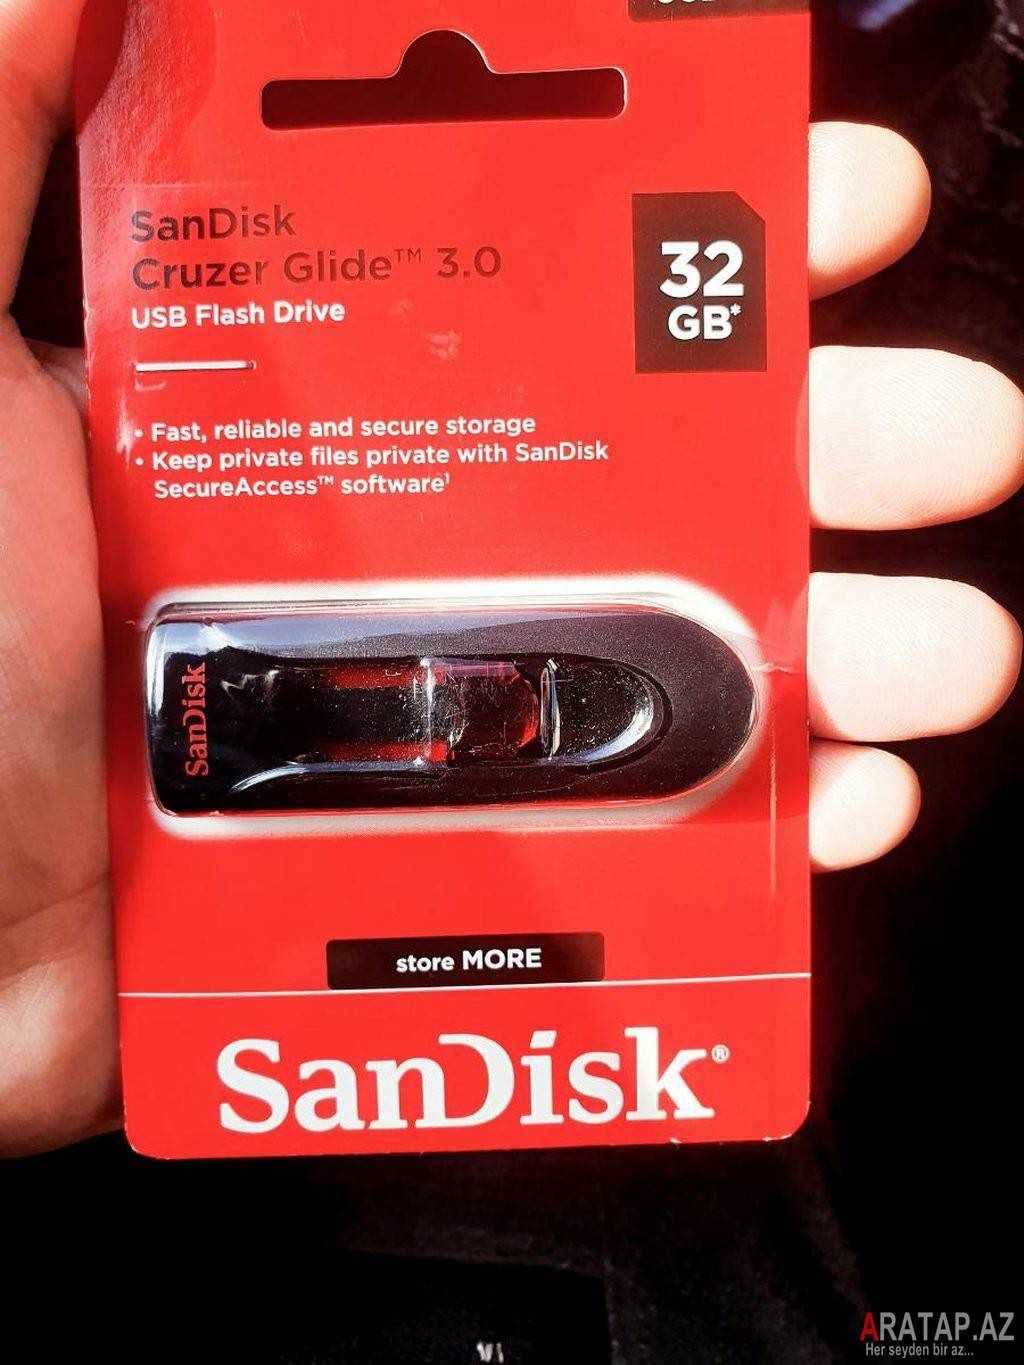 Sandisk 32 Gb Usb 3.0 Cruizer Guide Flaşkart